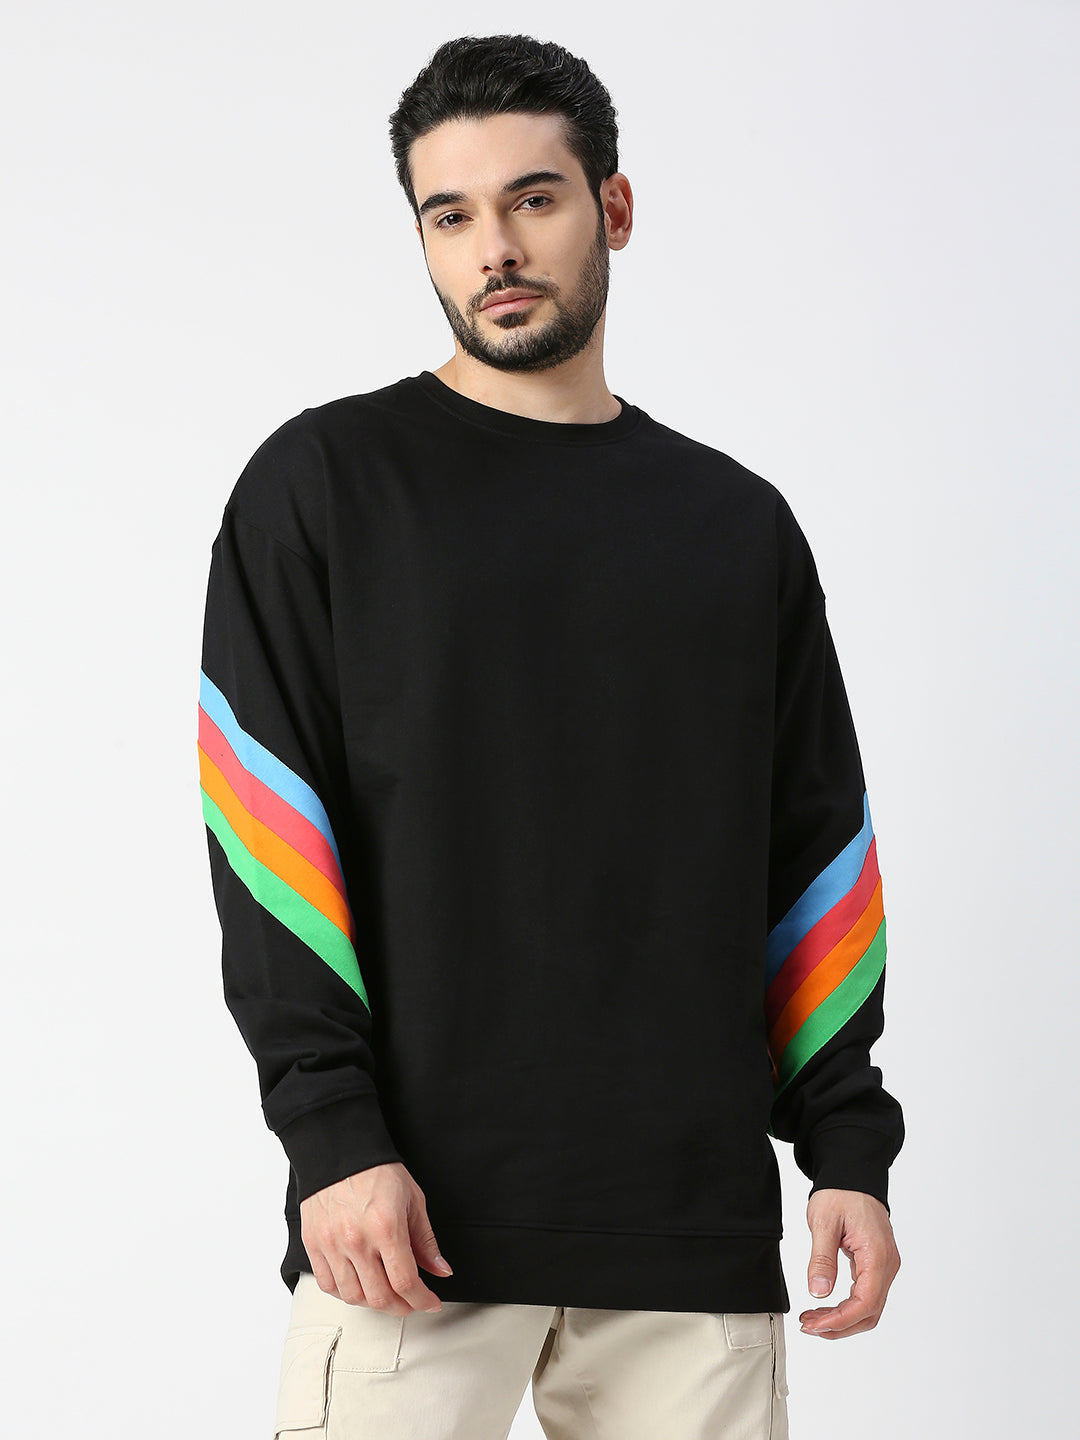 Buy Blamblack Black Rainbow line Full sleeved Sweatshirt.